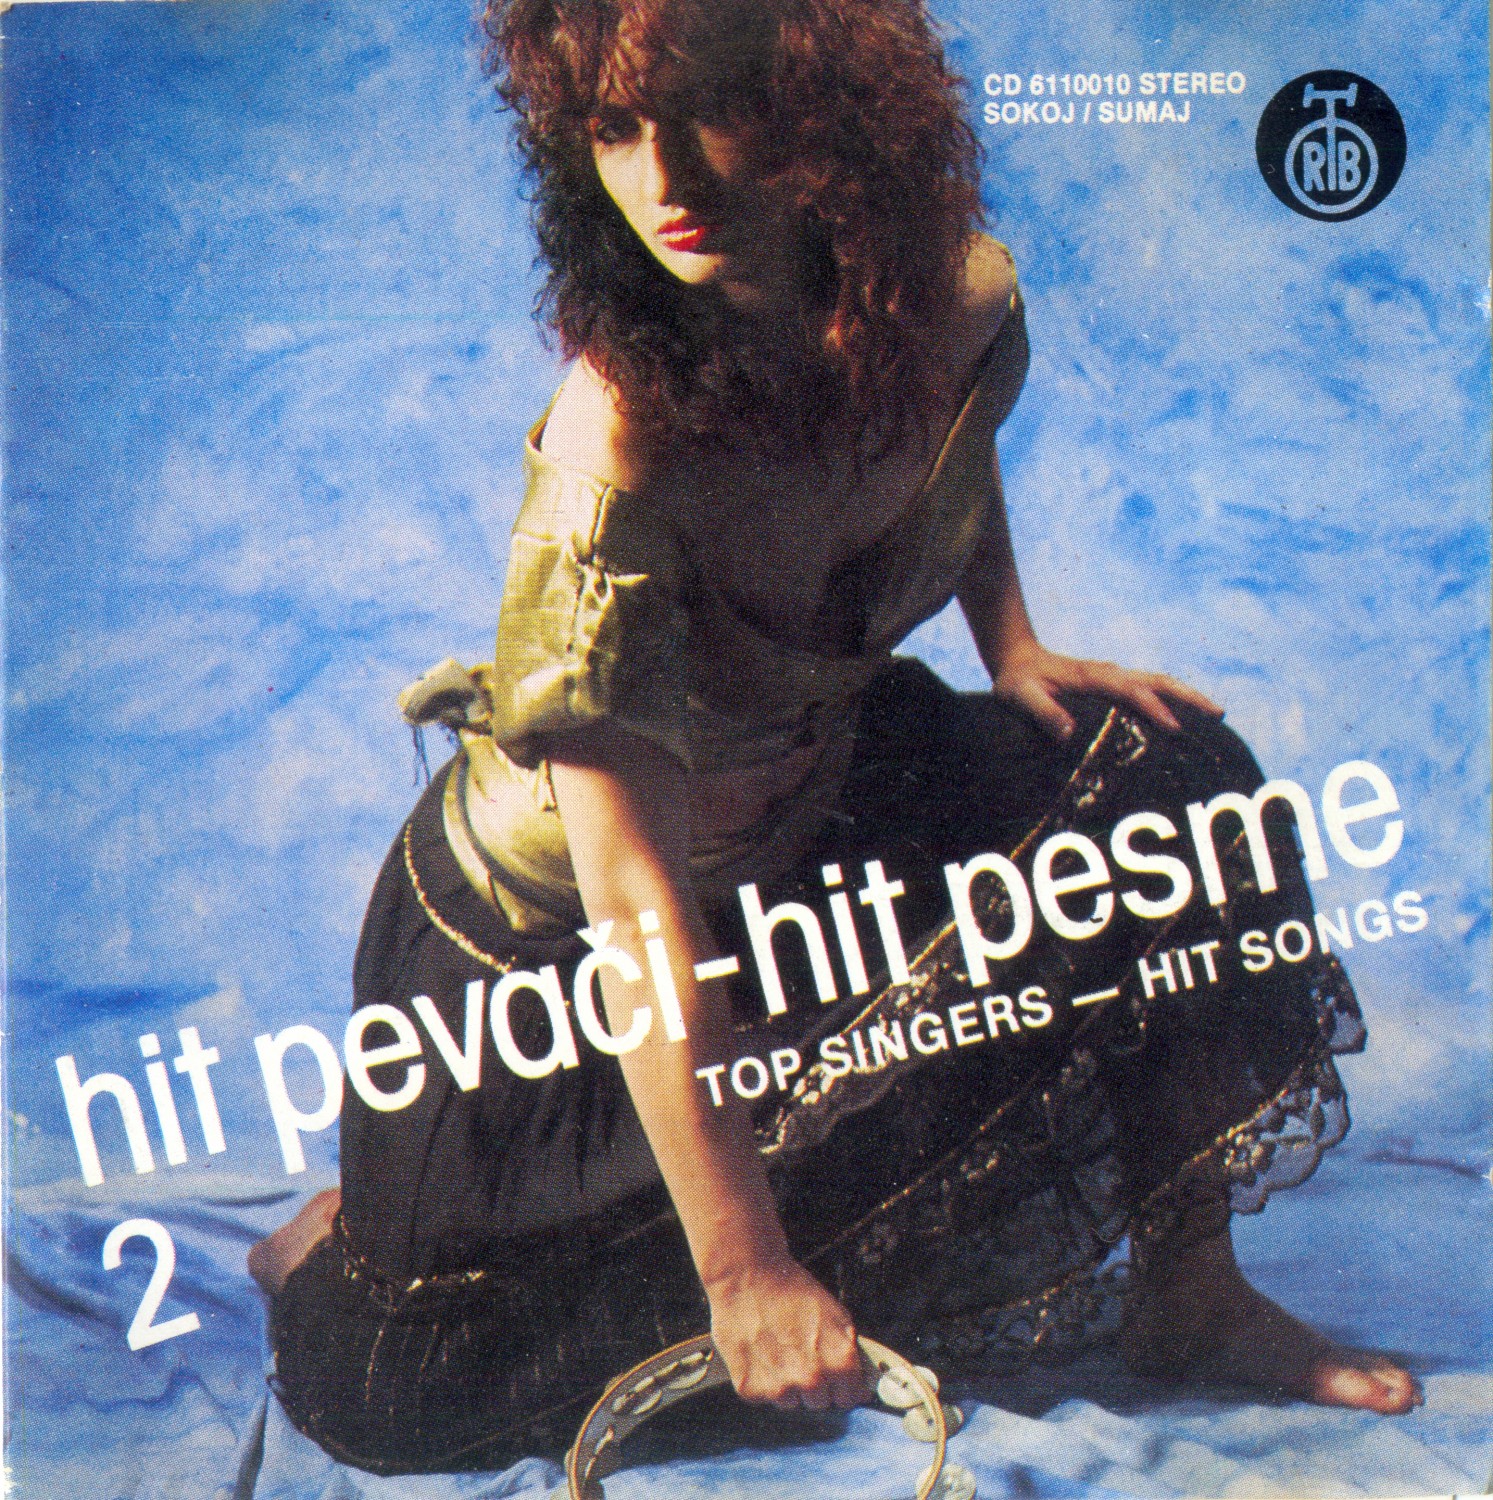 Hit pevaci Hit pesme 1987 Vol 2